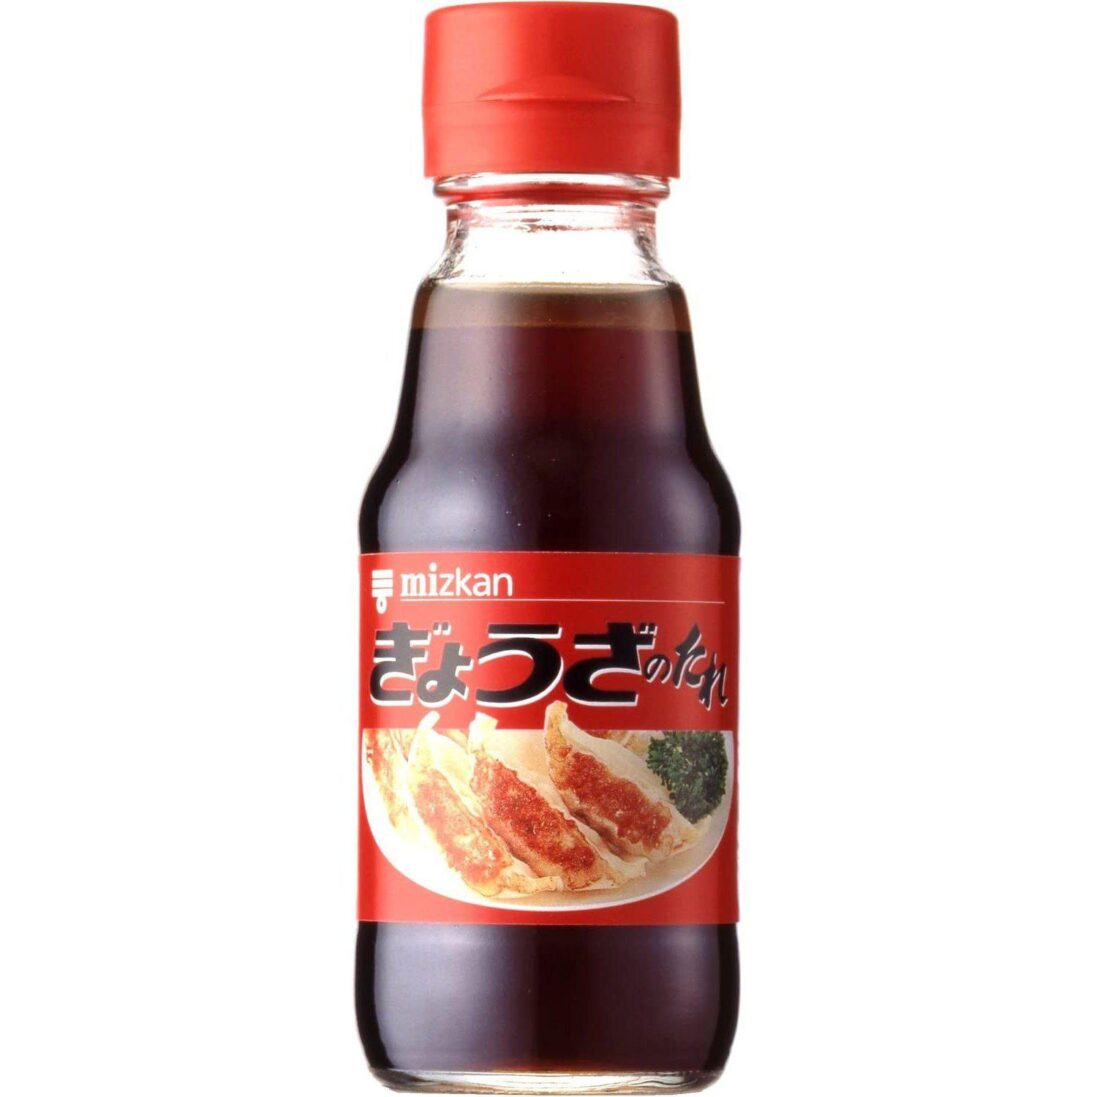 Mizkan-Japanese-Gyoza-Dumpling-Sauce-150ml-Japanese-Taste_2048x.jpg